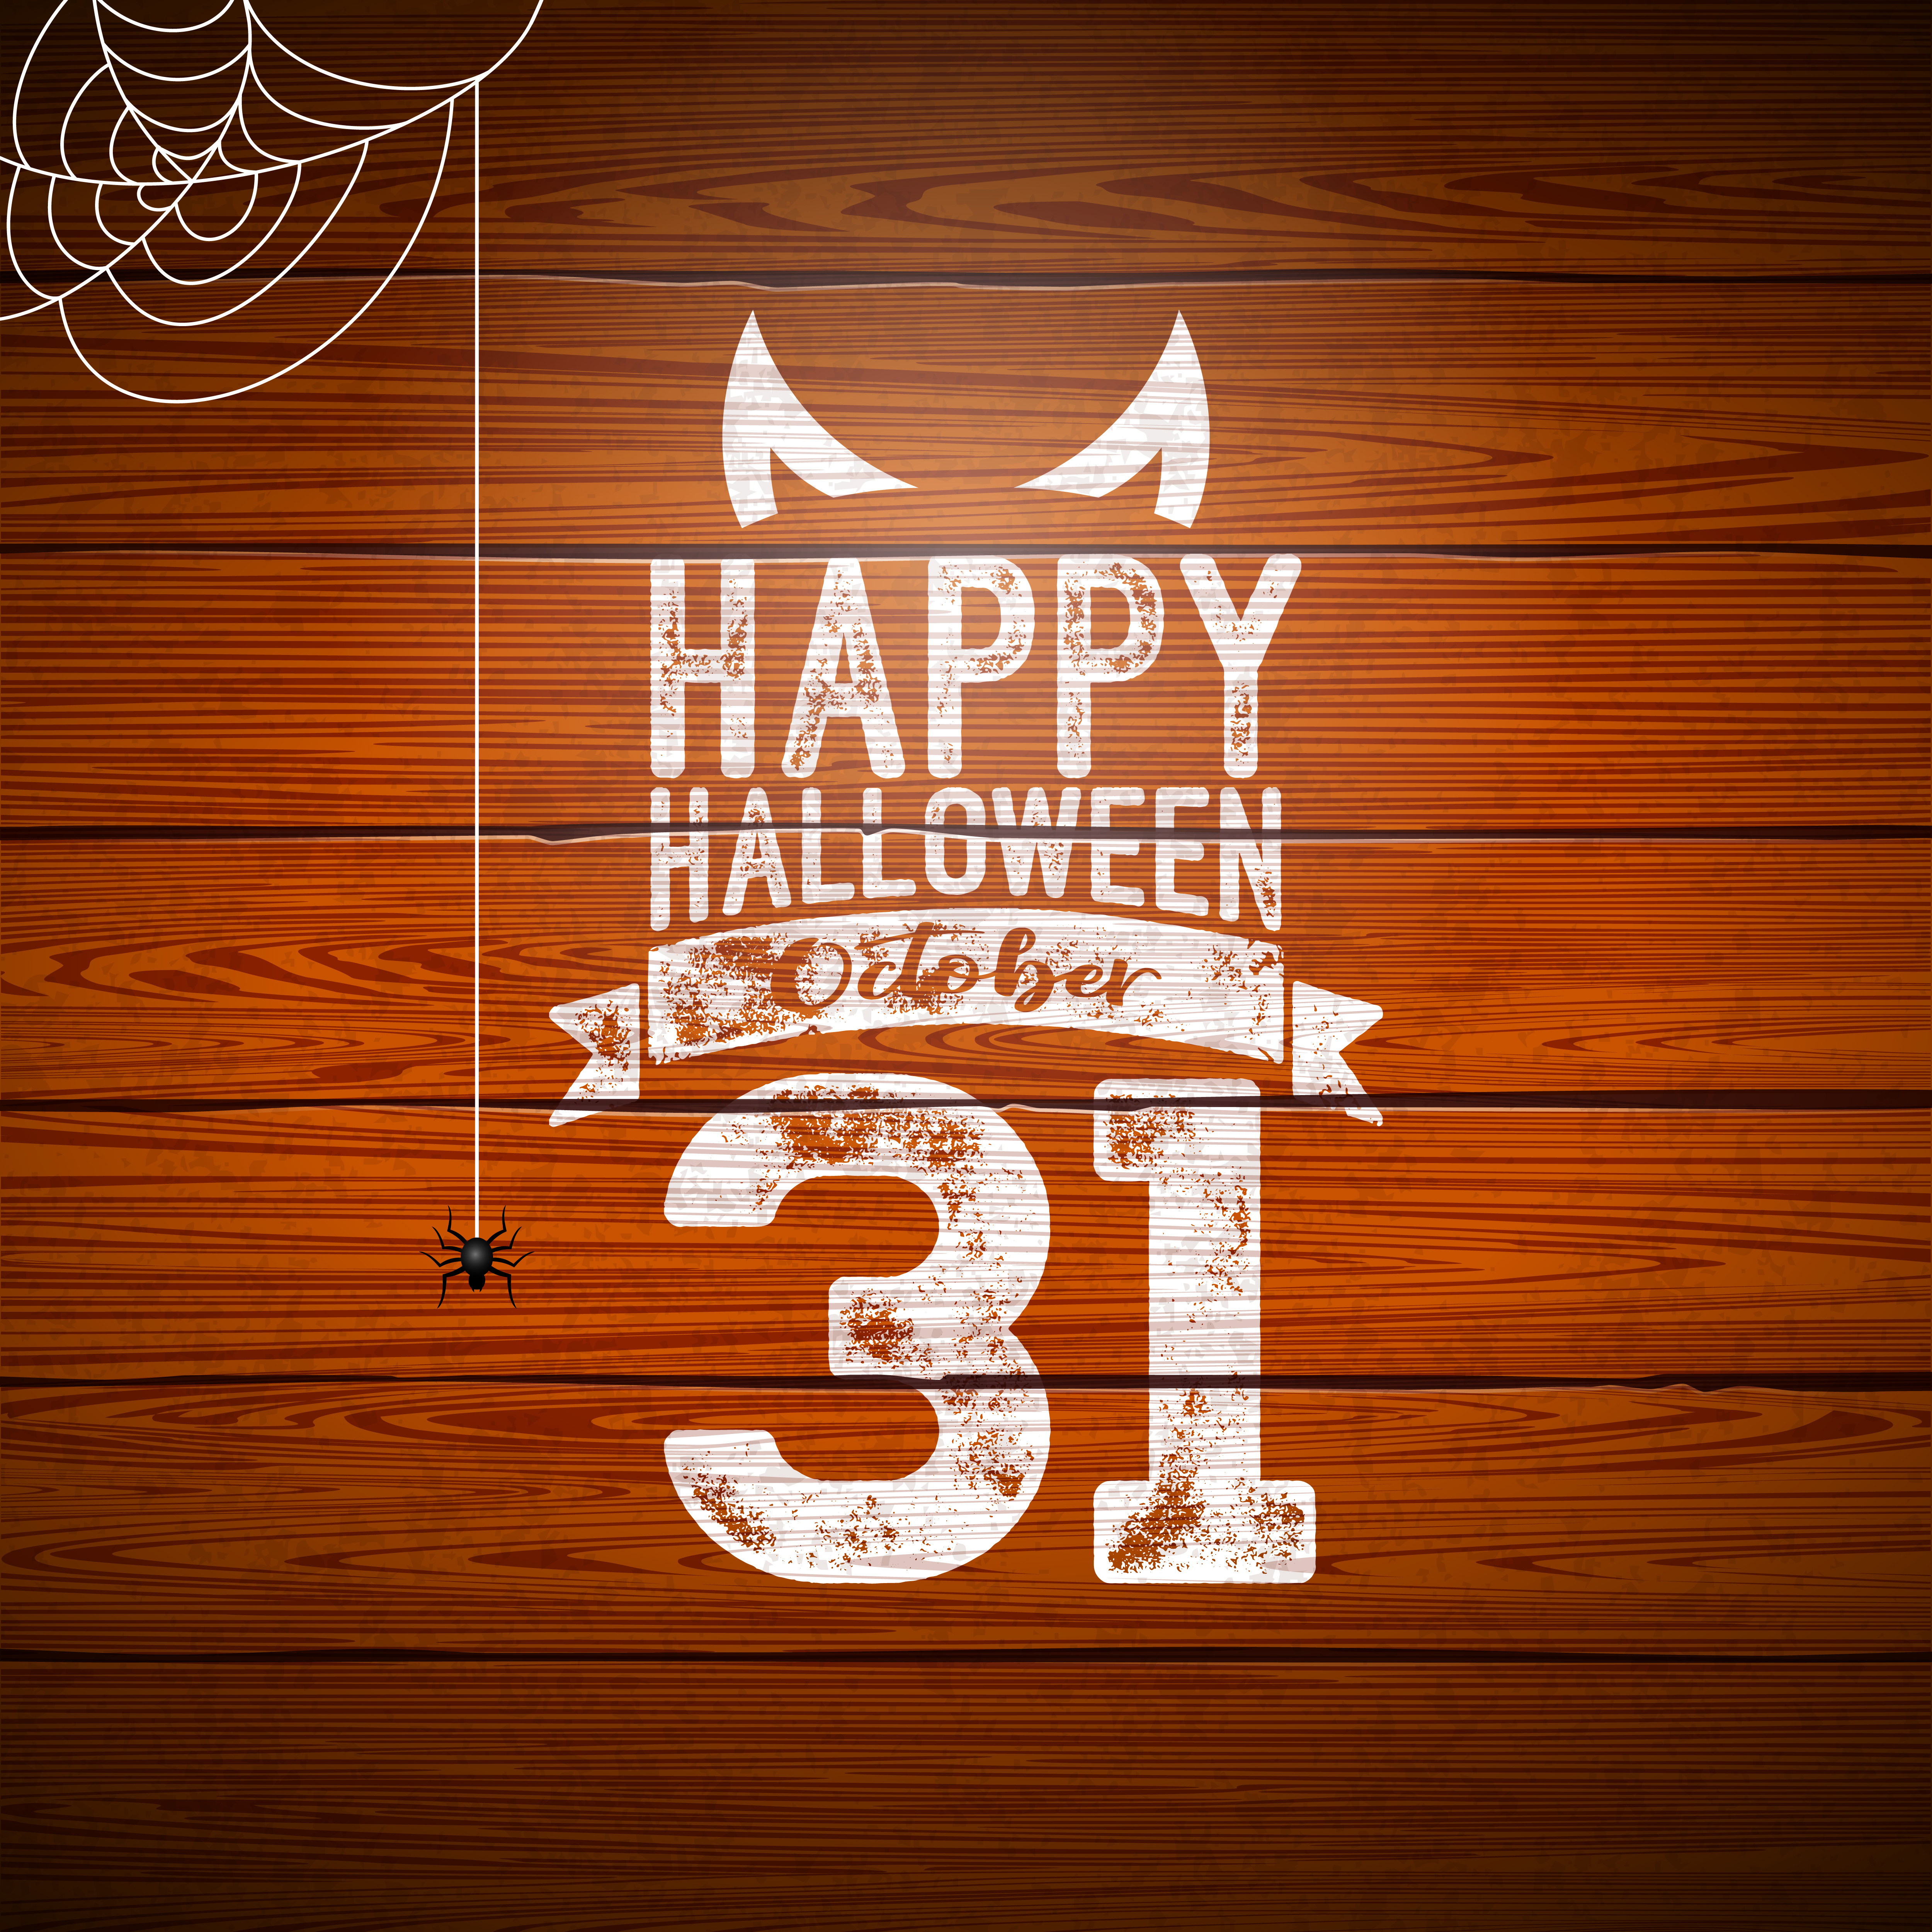 Download Happy Halloween banner illustration - Download Free ...